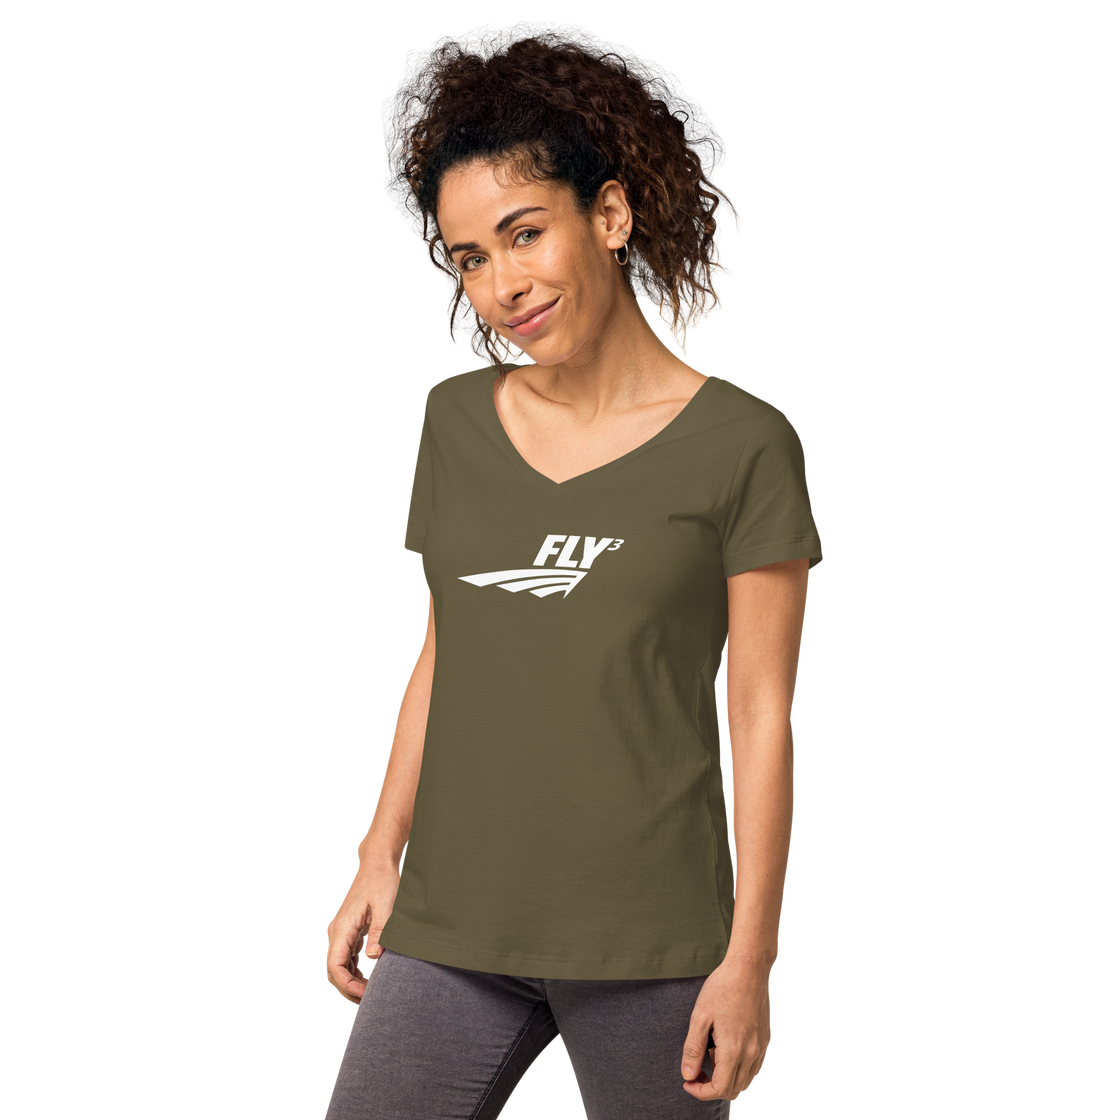 FLY³ Women’s fitted v-neck t-shirt | Flycube